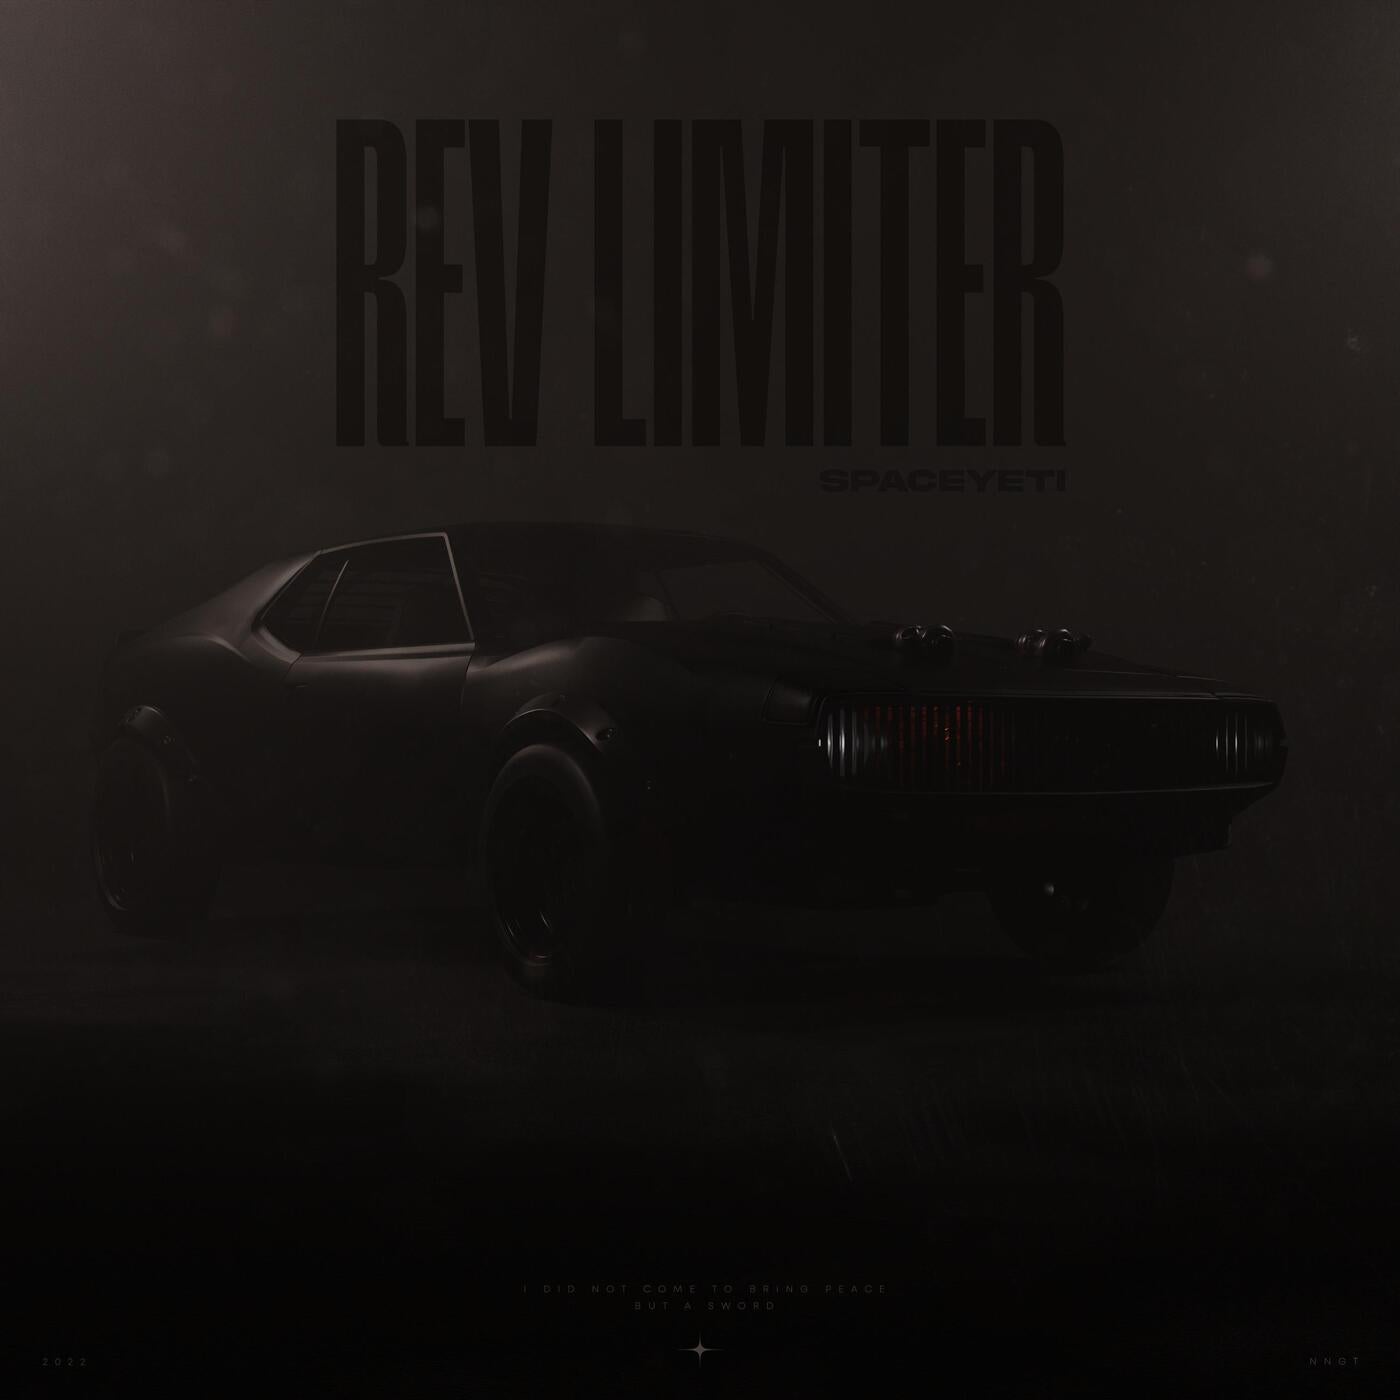 Rev Limiter